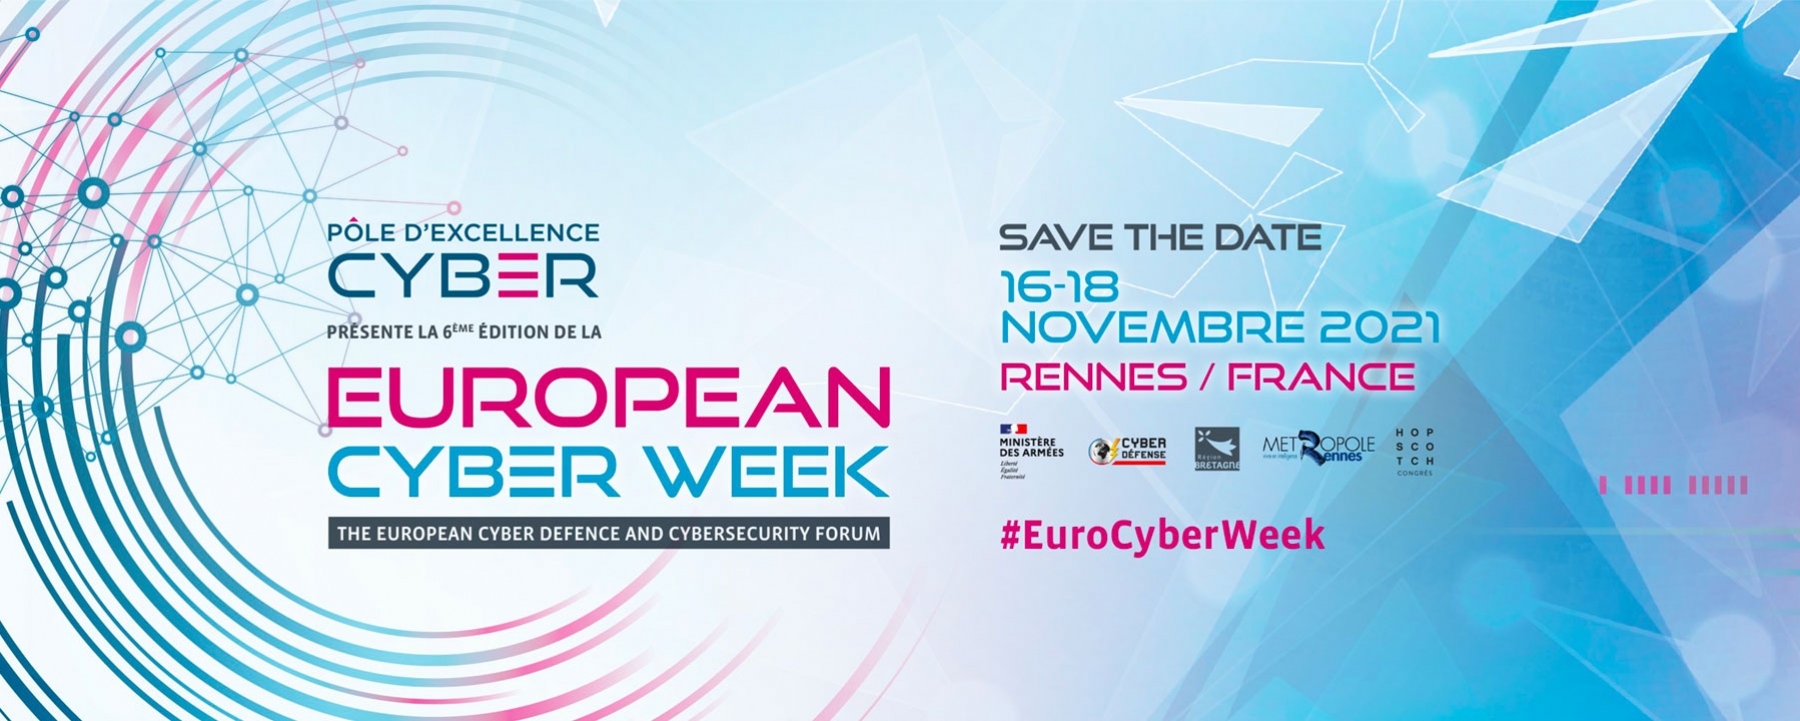 European Cyber Week - 6e édition